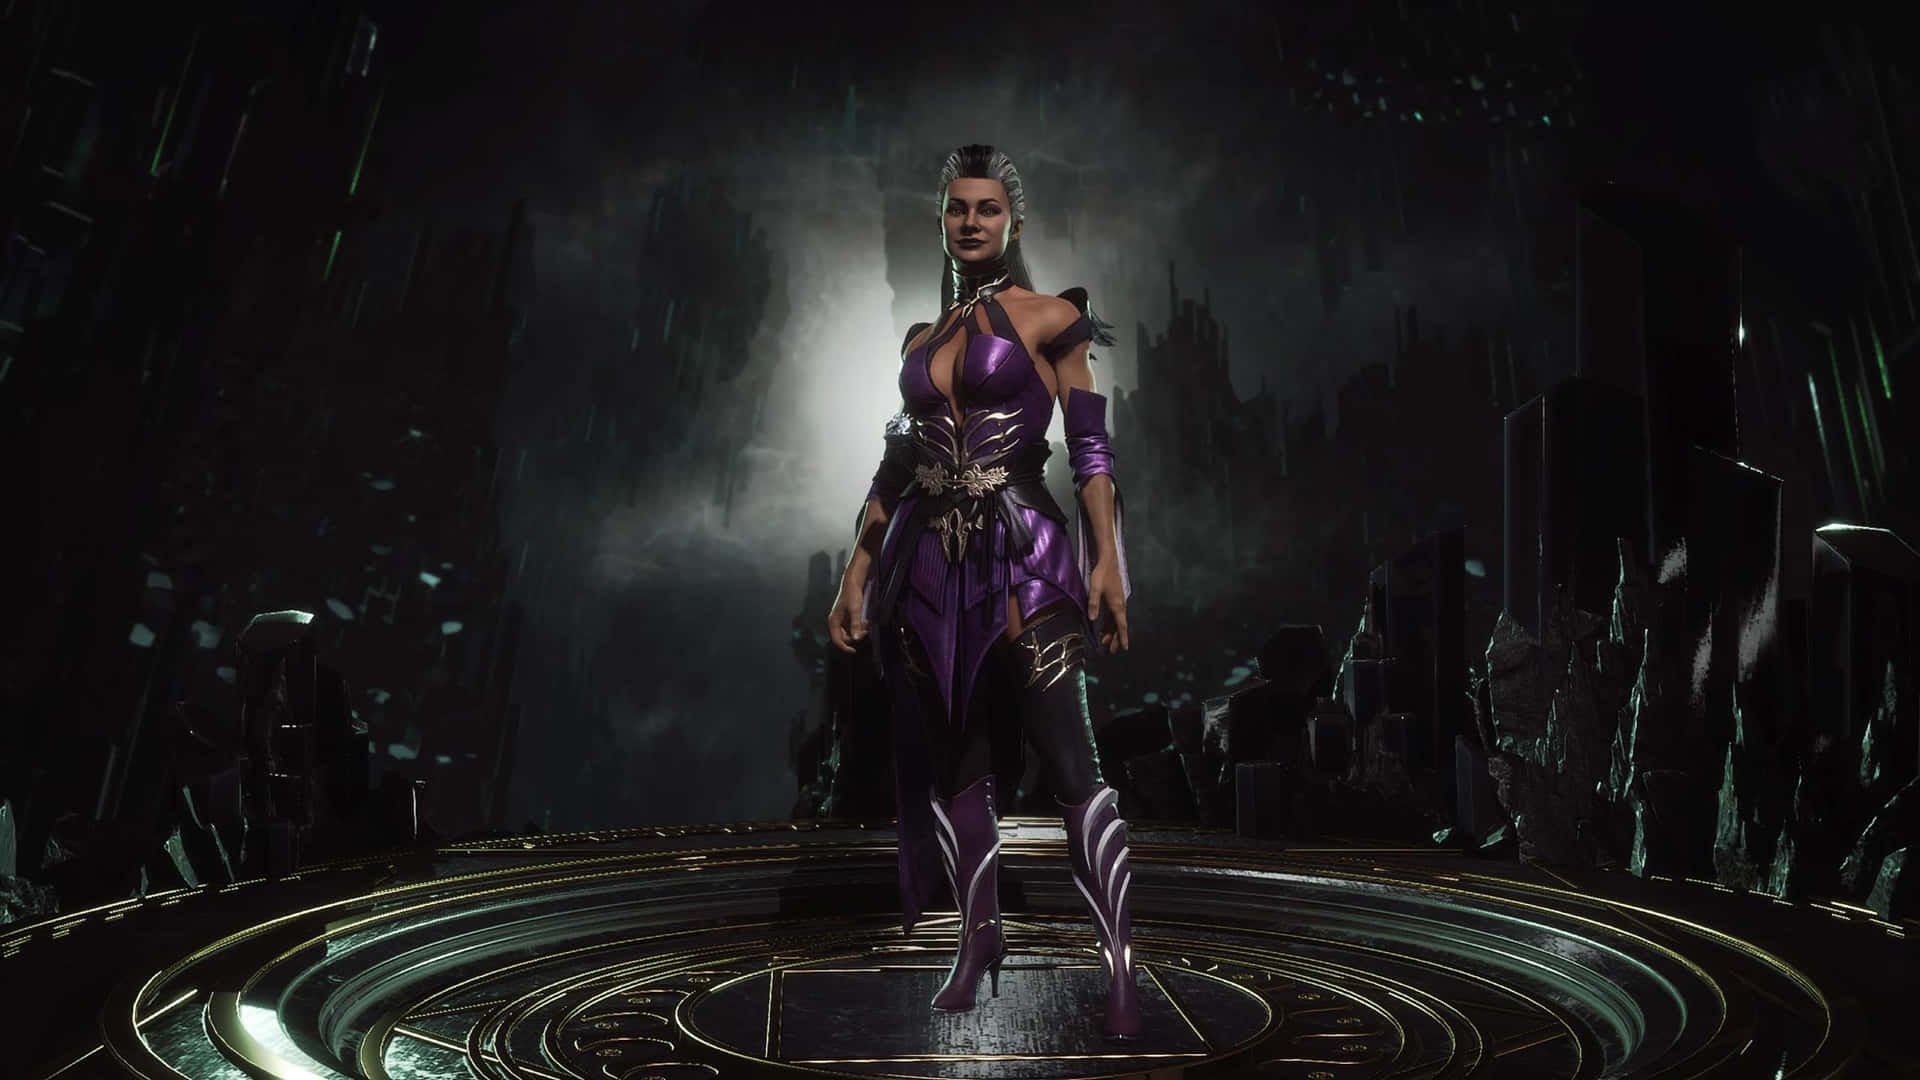 Queen Sindel Strikes Pose in Mortal Kombat Wallpaper